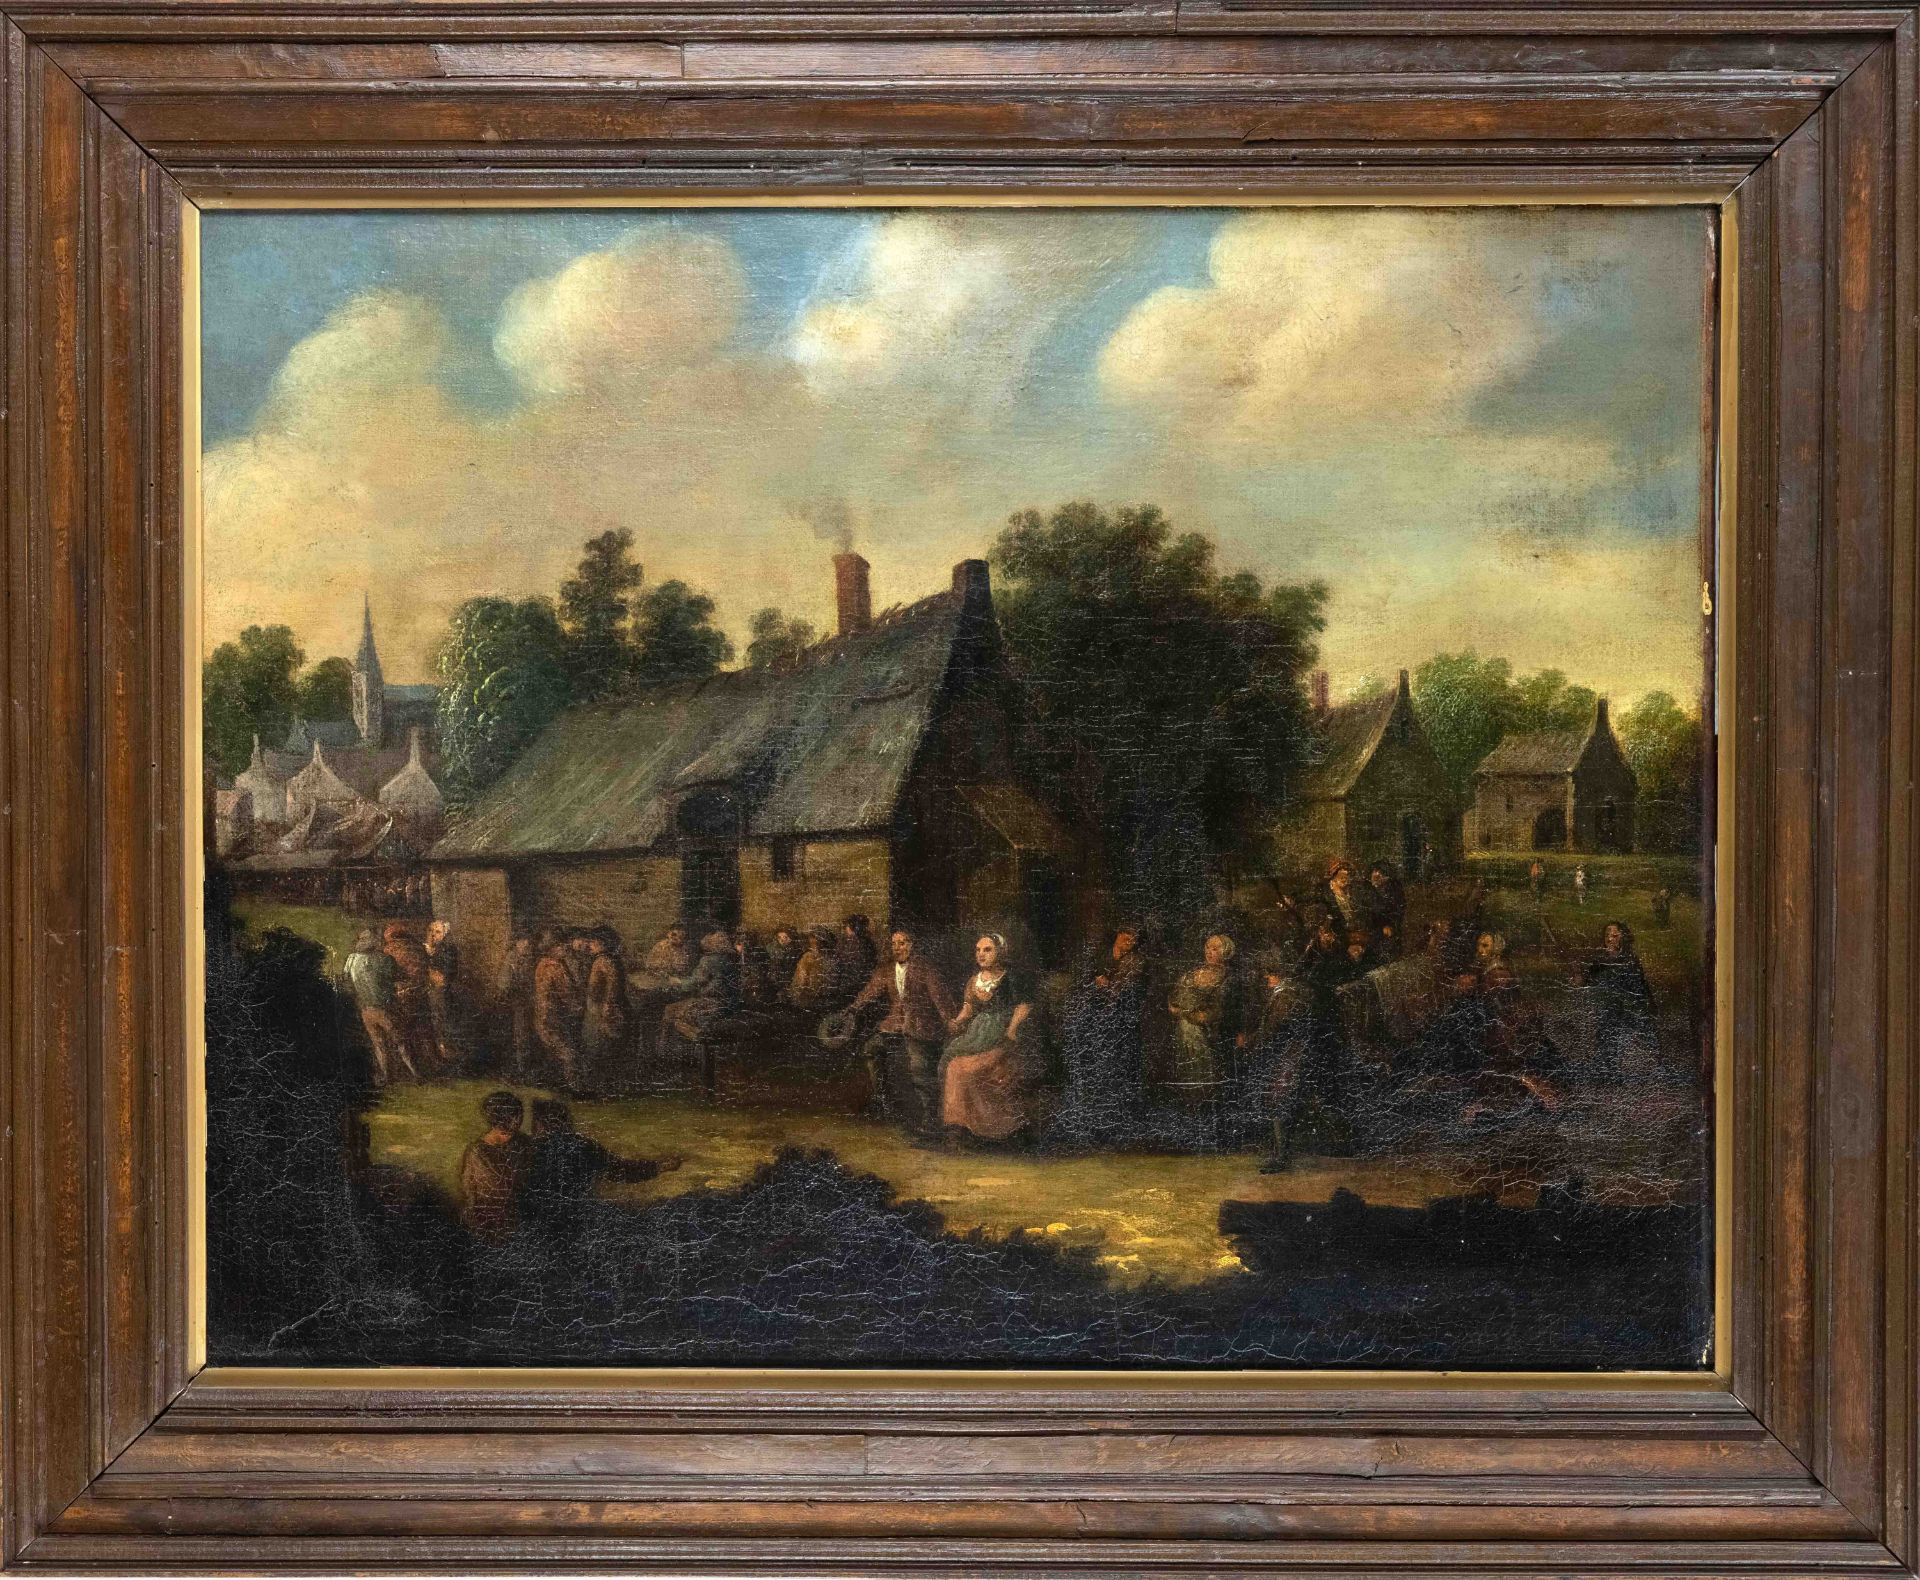 Cornelius Doogsloot (1630-1673) (attrib.), Dutch genre painter, multi-figure fair scene, oil on